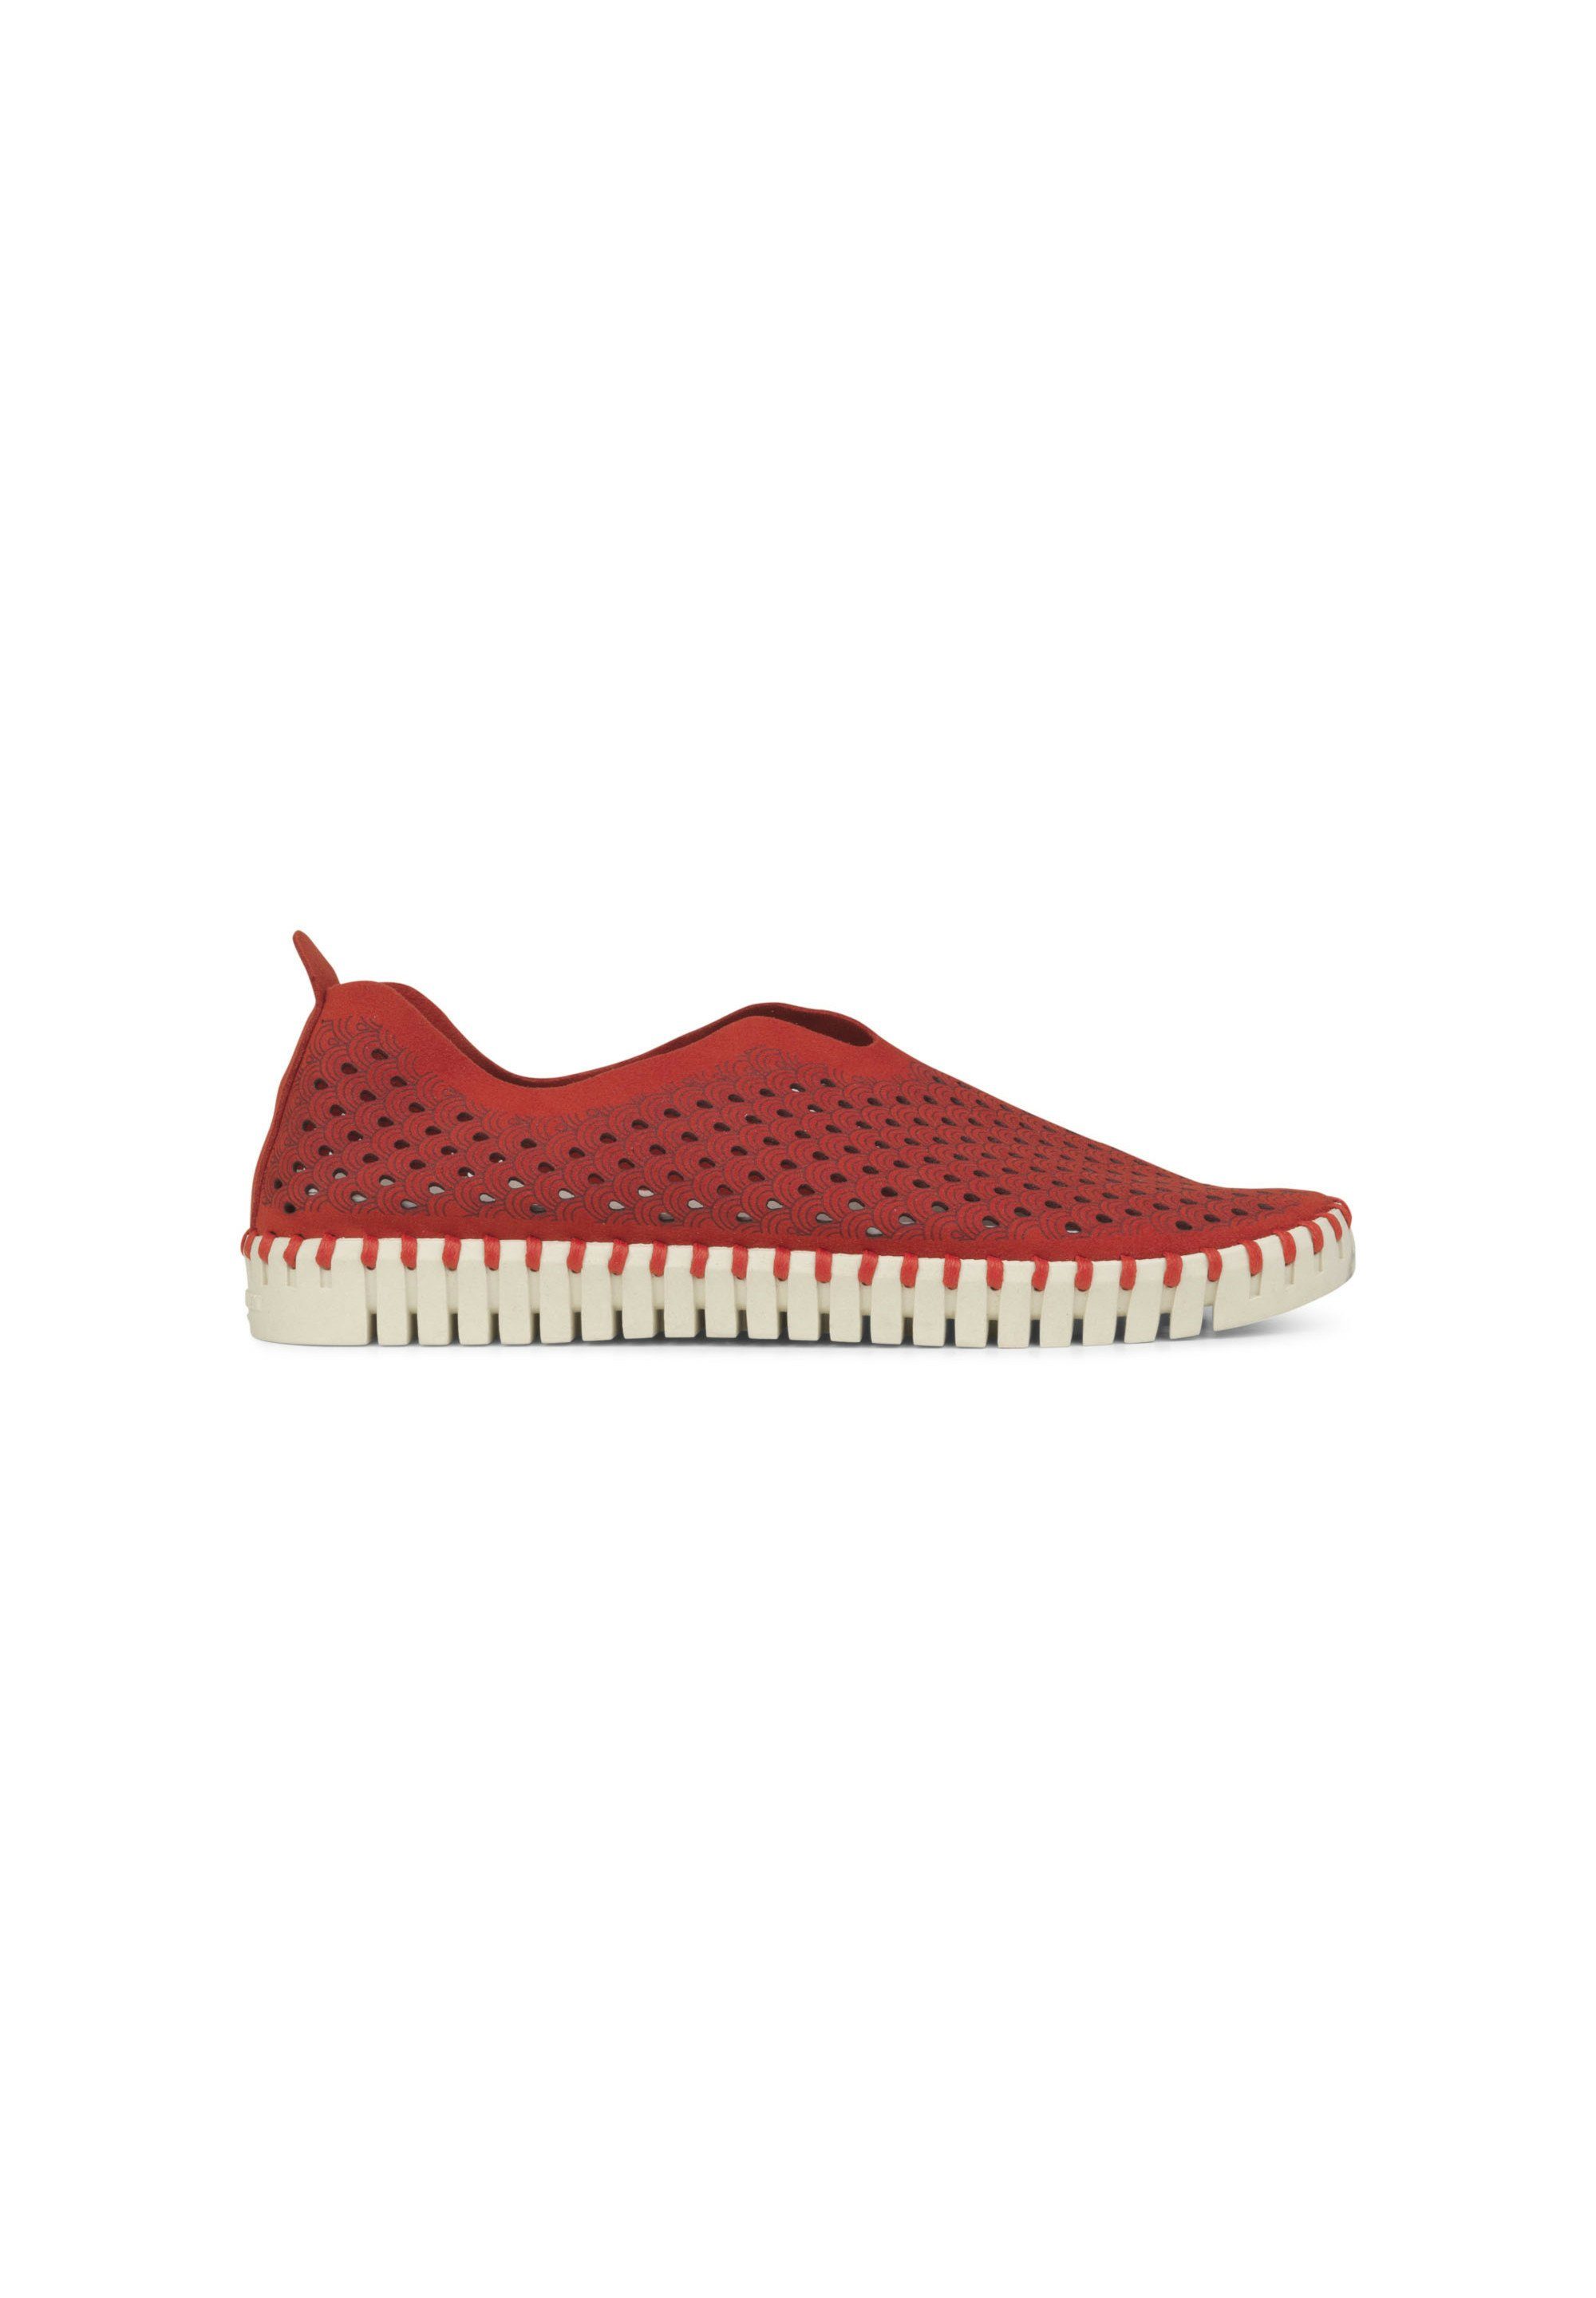 Ilse Jacobsen TULIP3275 Sneaker Praktisch, ohne Klebstoff bequem, flexible red deep Laufsohle